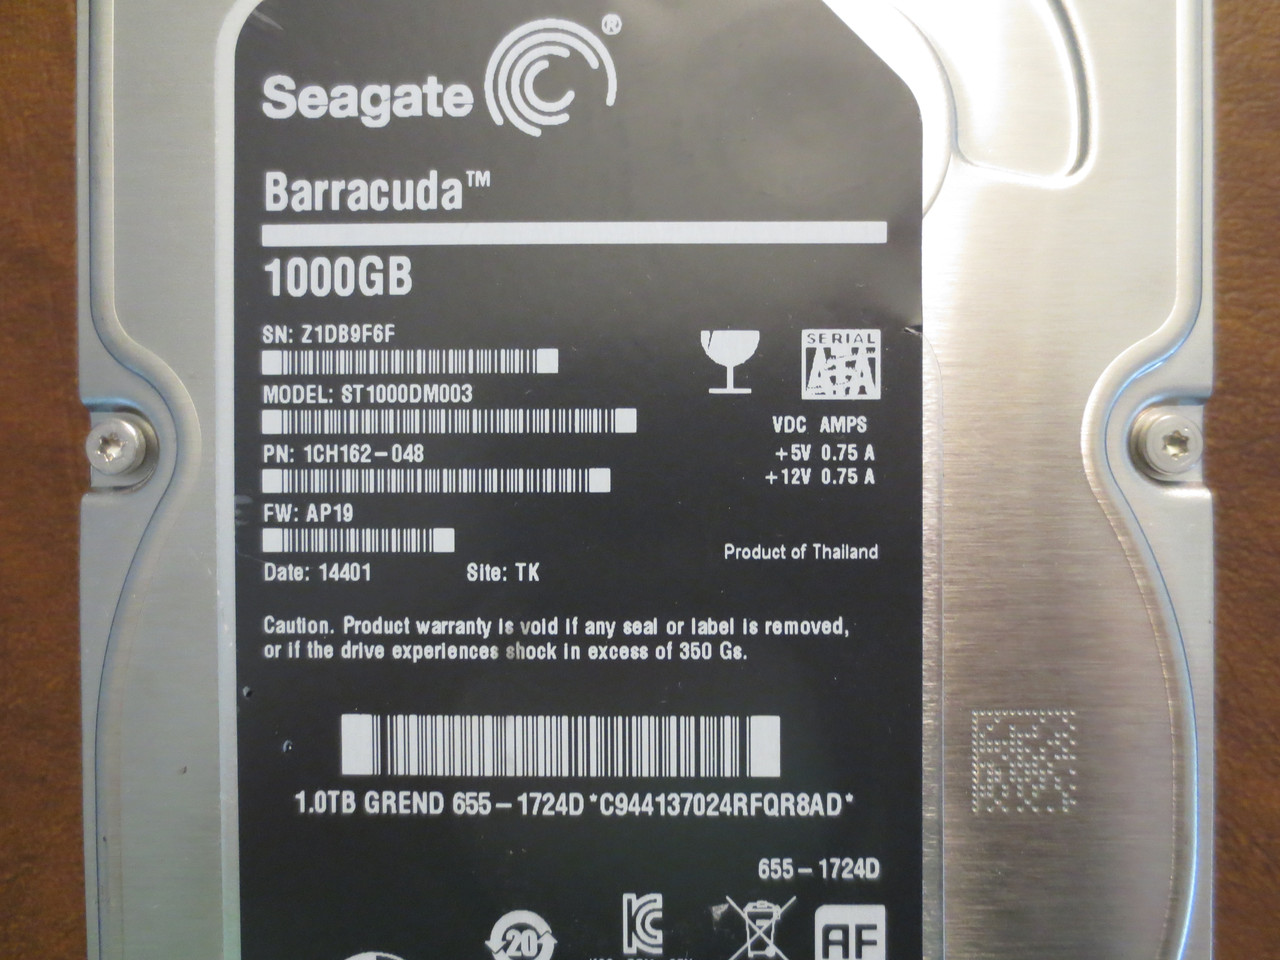 Seagate ST1000DM003 1CH162-048 FW:AP19 TK Apple#655-1724D 1000gb Sata -  Effective Electronics